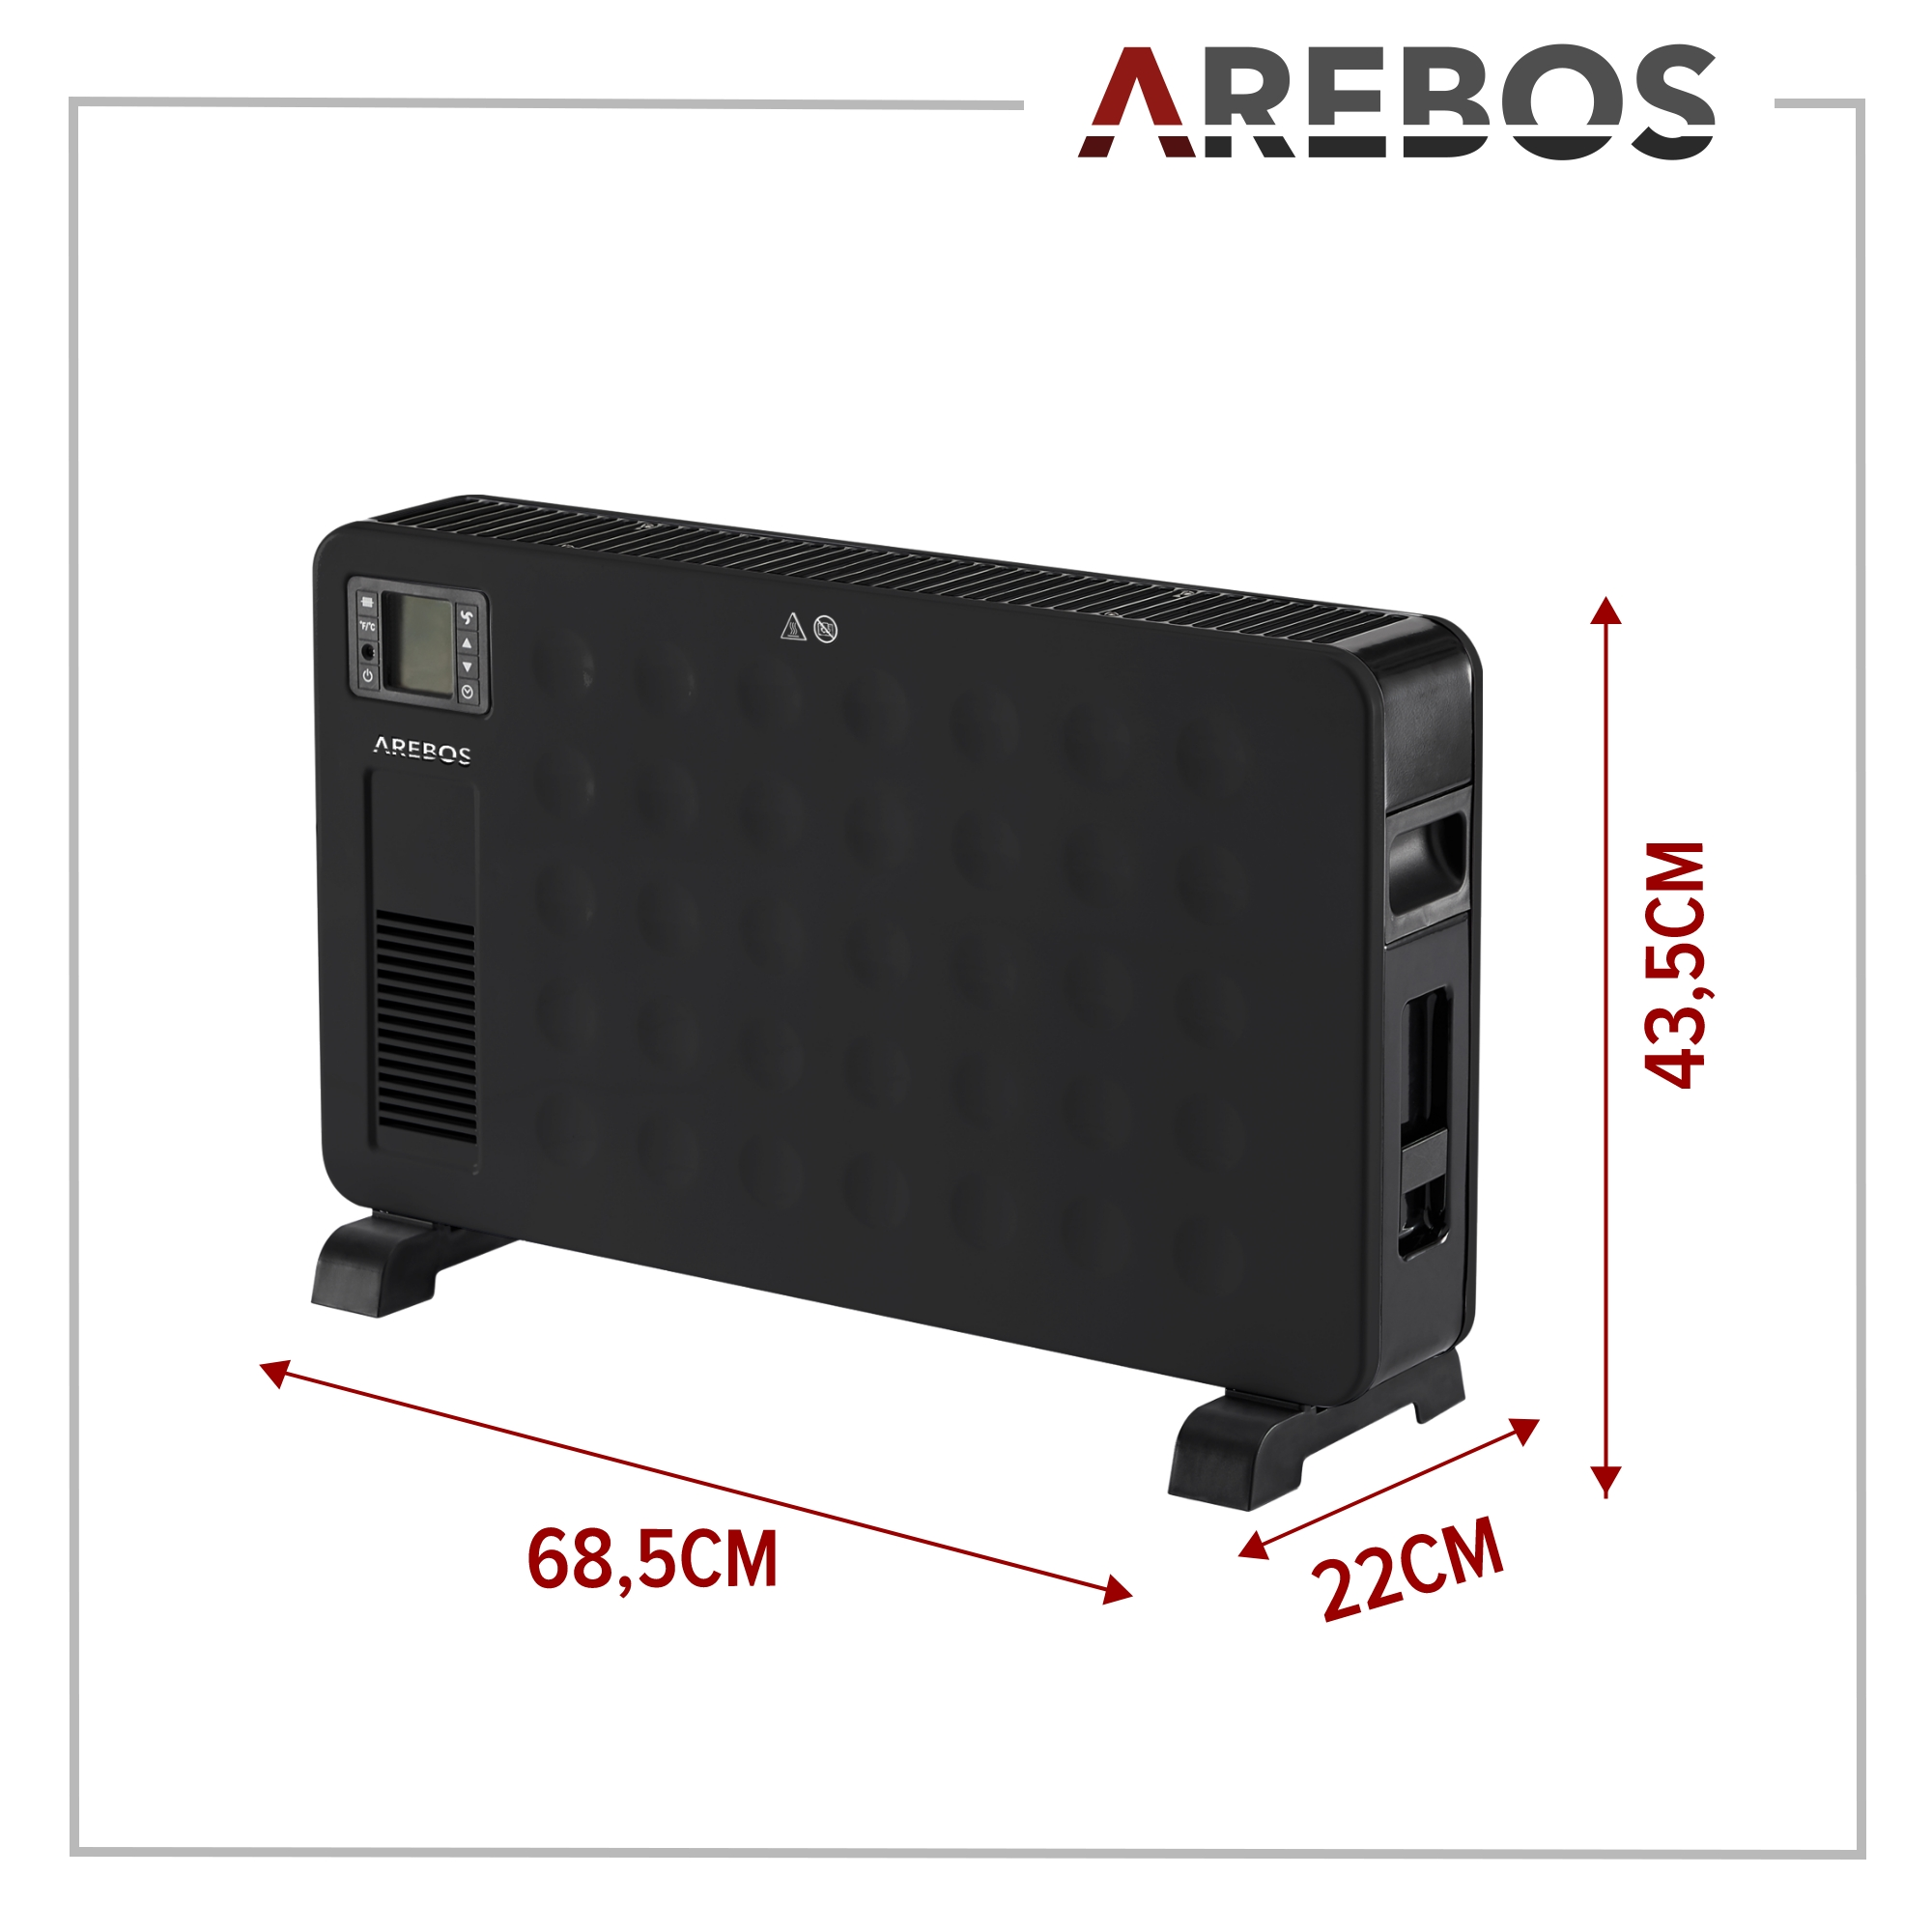 AREBOS | 3 leistungsstarke (2300 Watt) Thermostat | Heizstufen Konvektor